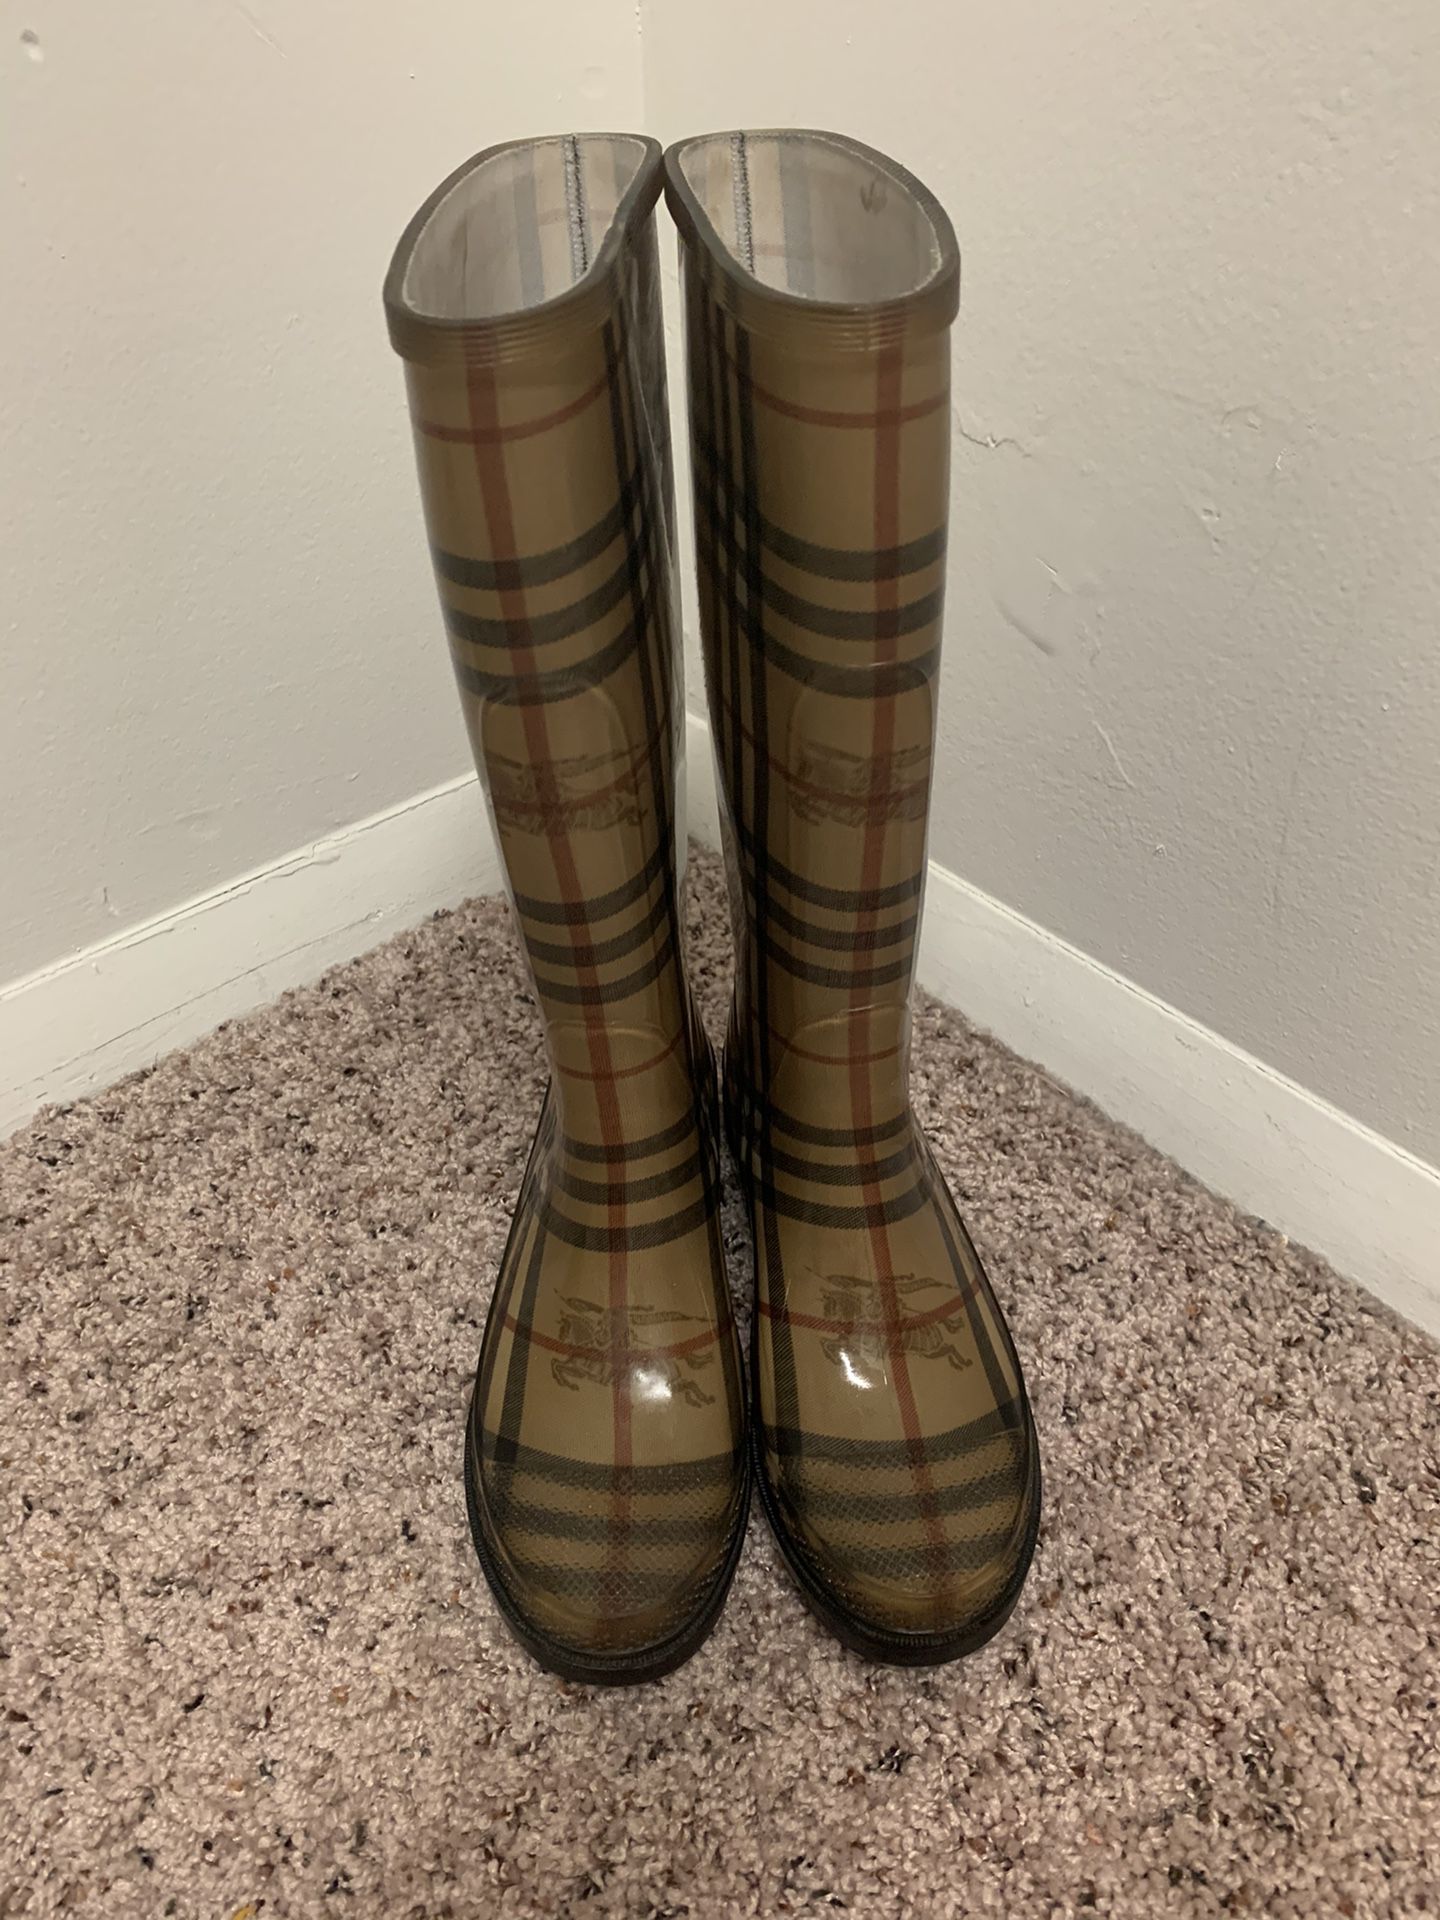 burberry women’s rain boots.